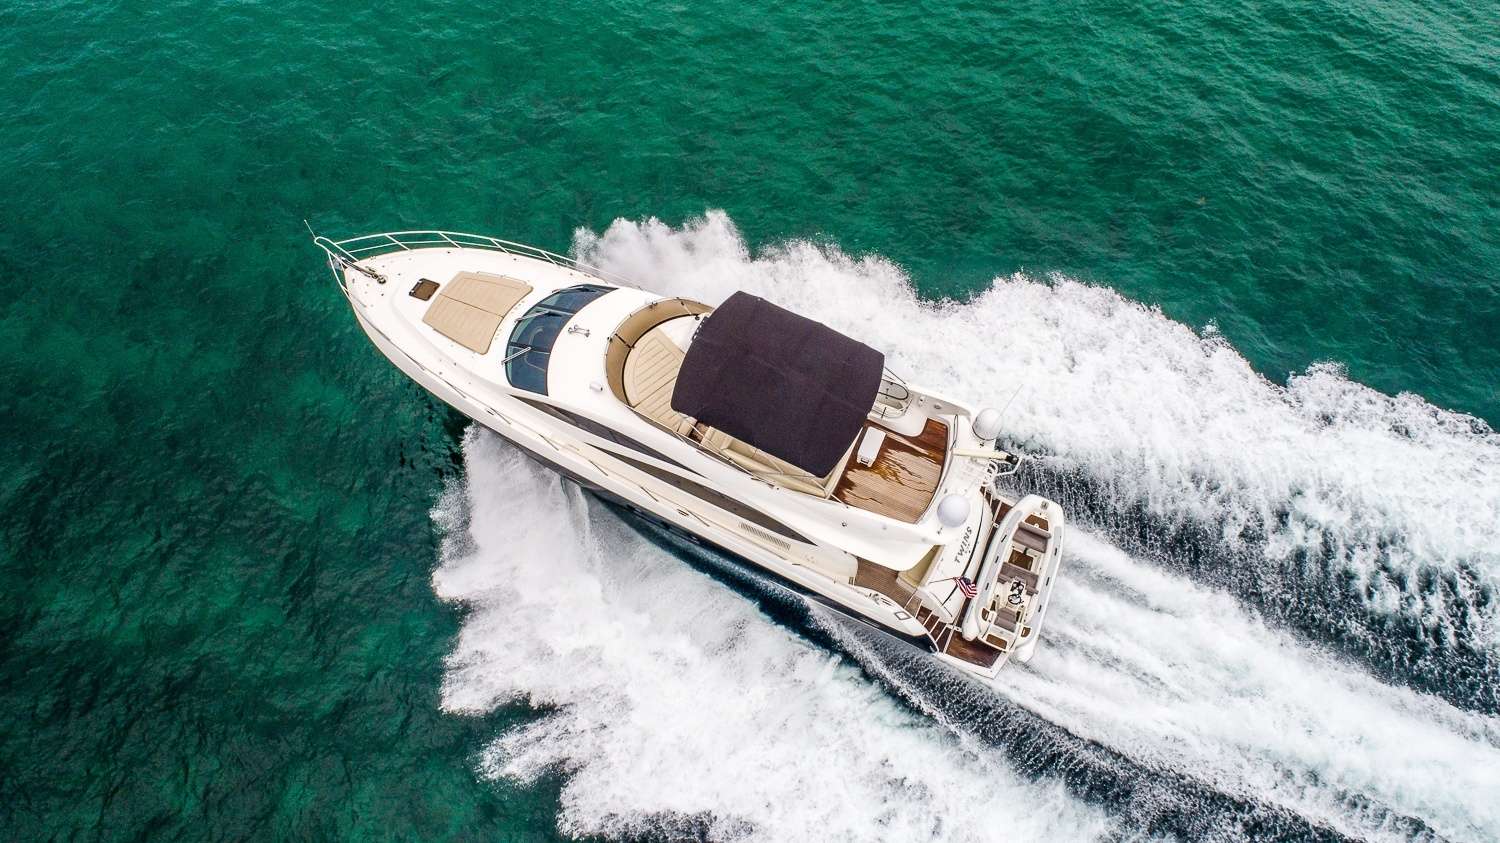 twins - Yacht Charter Newport & Boat hire in US East Coast & Bahamas 2